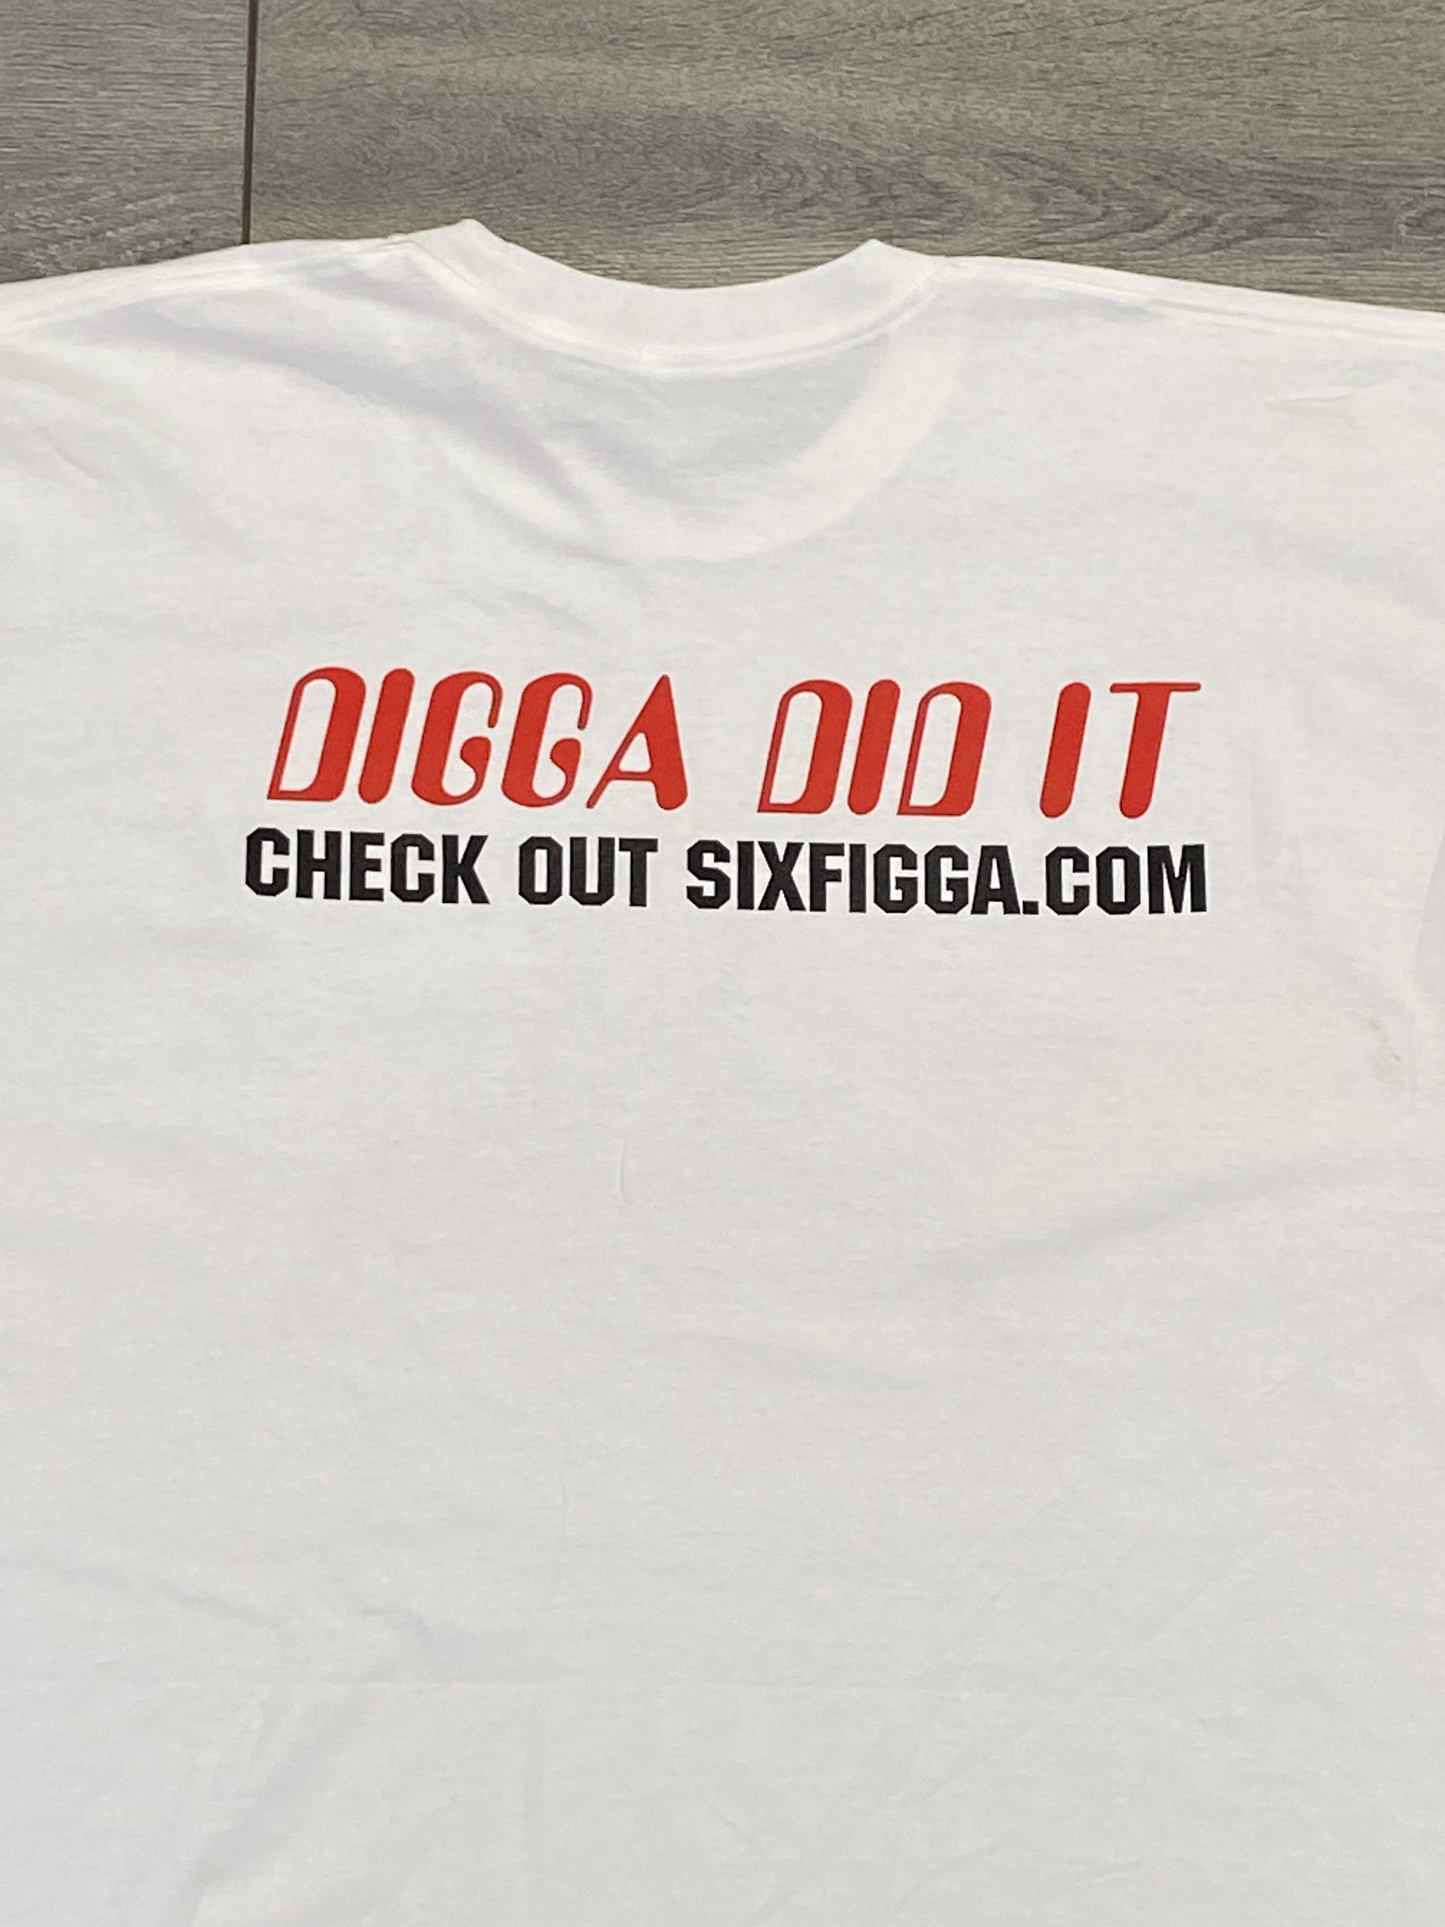 Classic "Digga Did It" T-Shirt